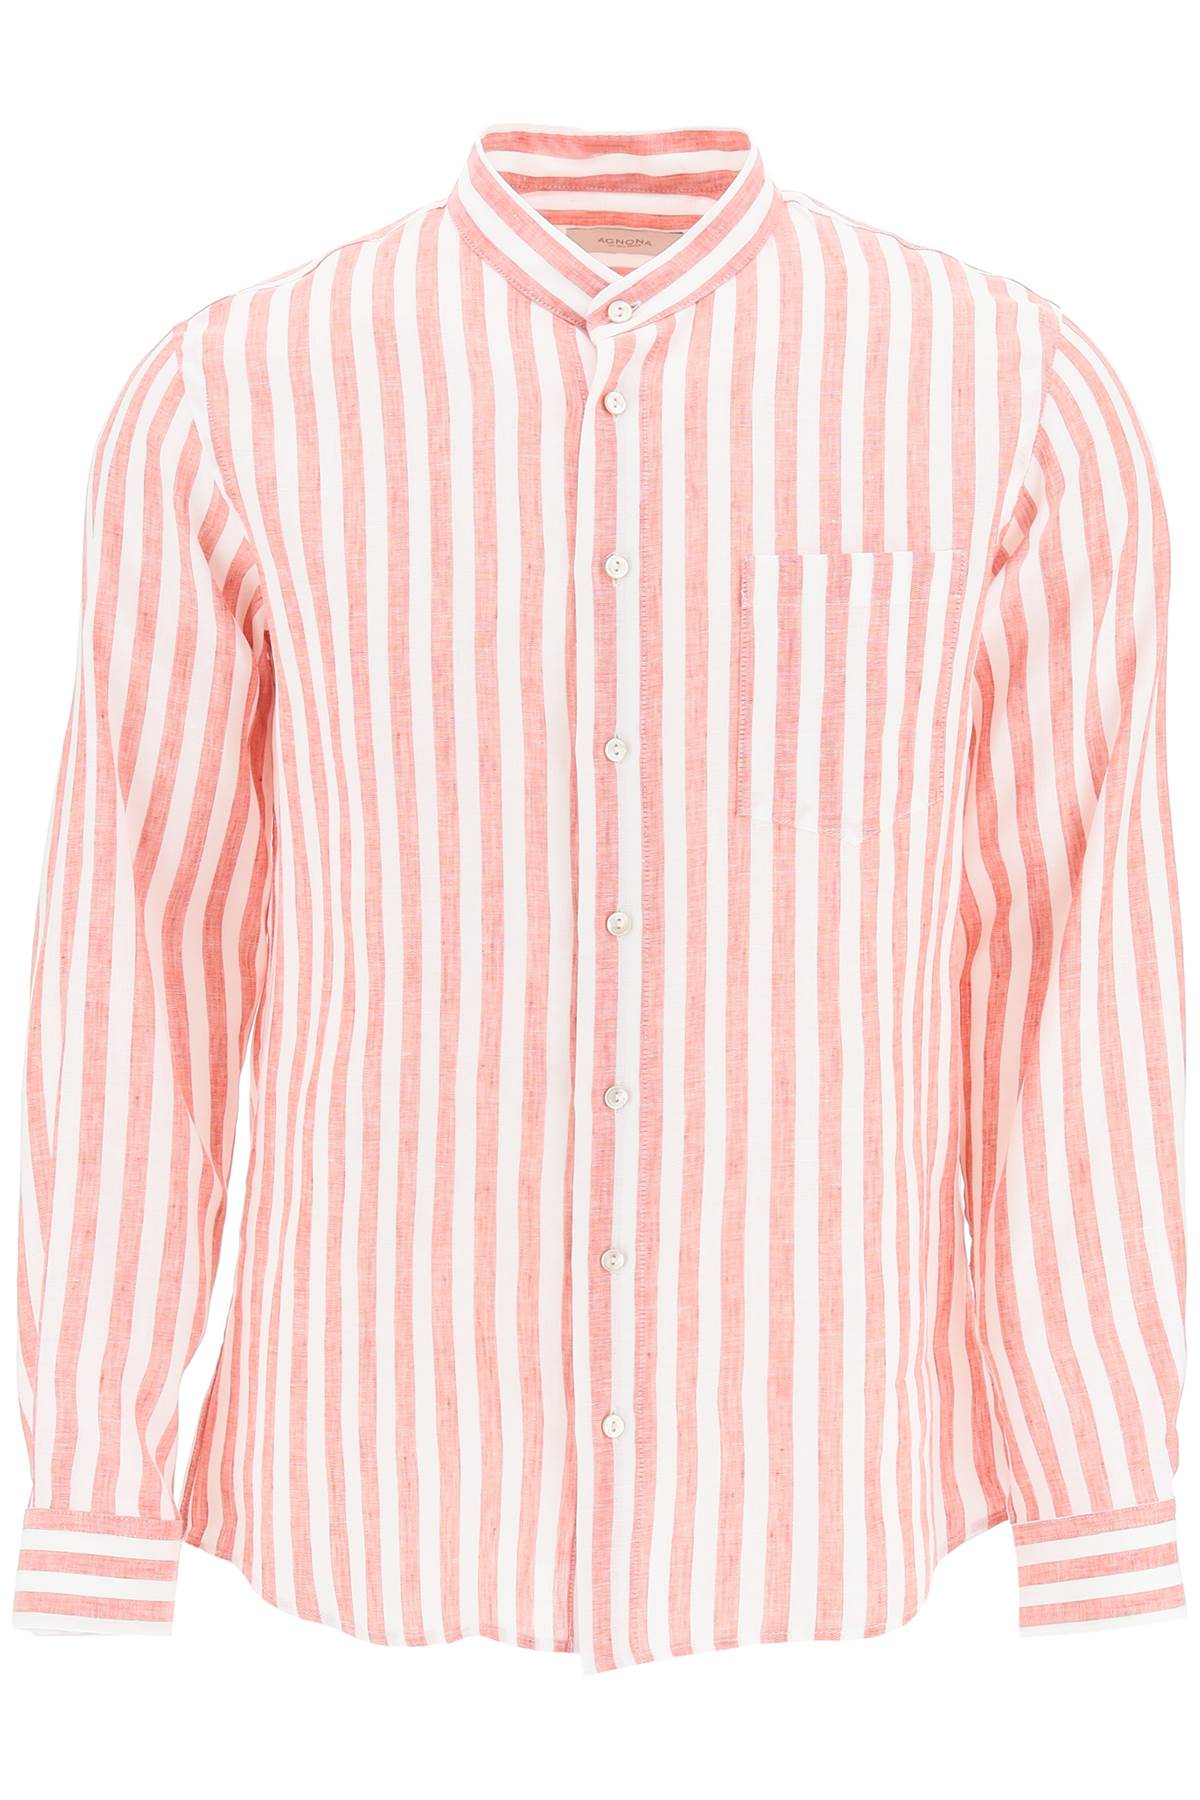 Agnona striped linen shirt-0